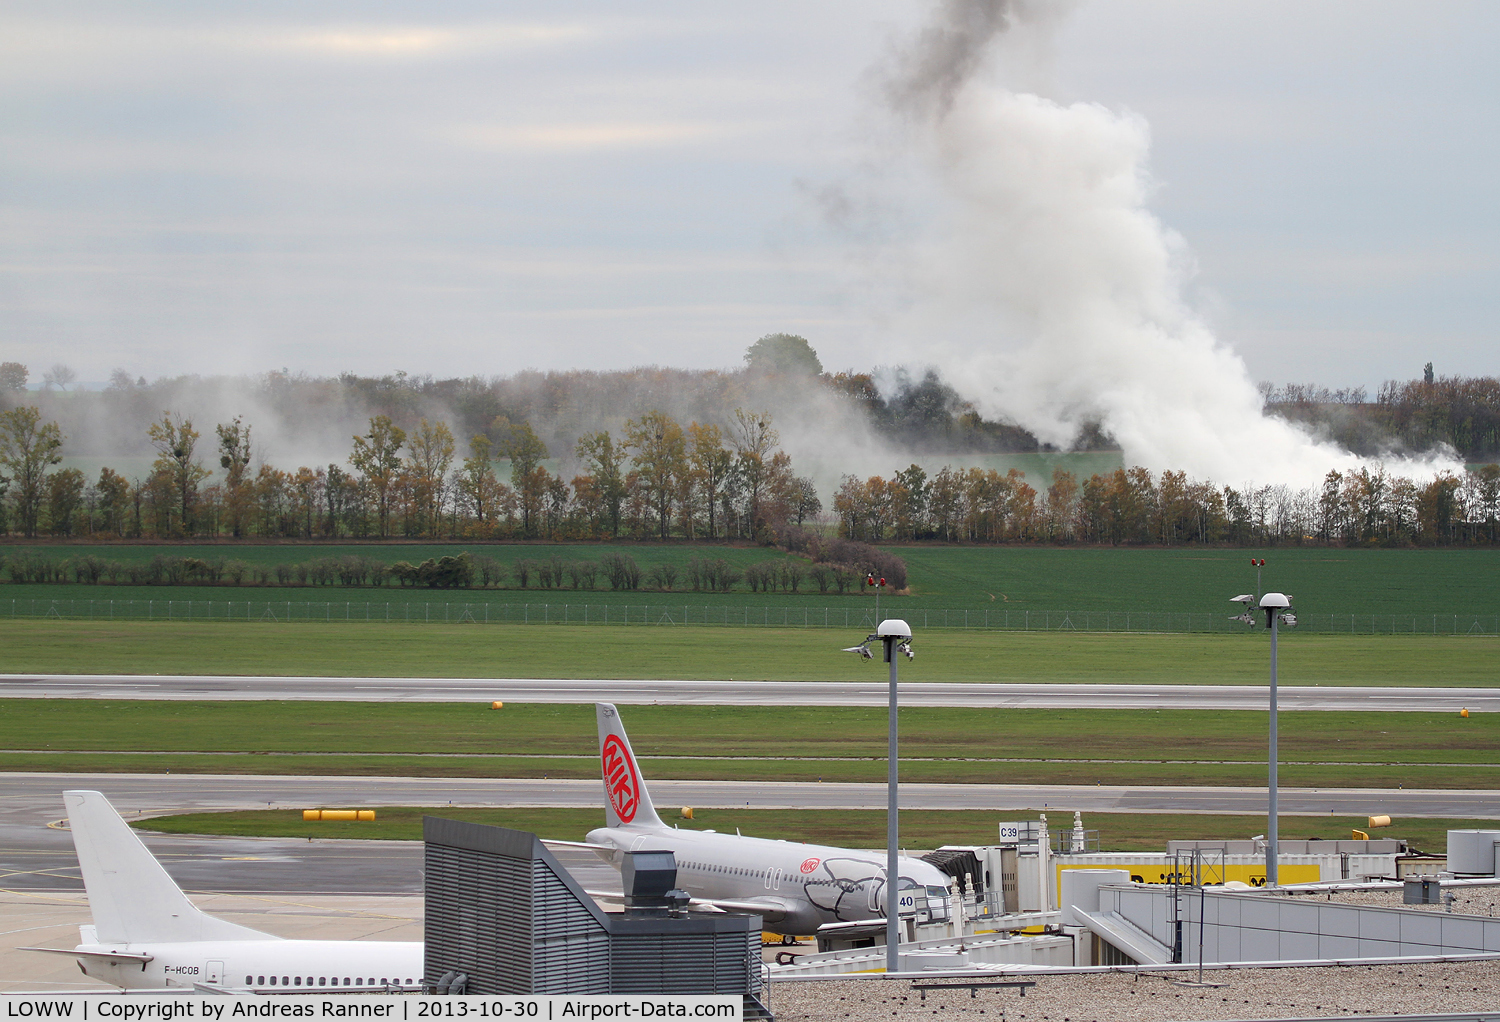 Vienna International Airport, Vienna Austria (LOWW) - white aircraft, white smoke at VIE